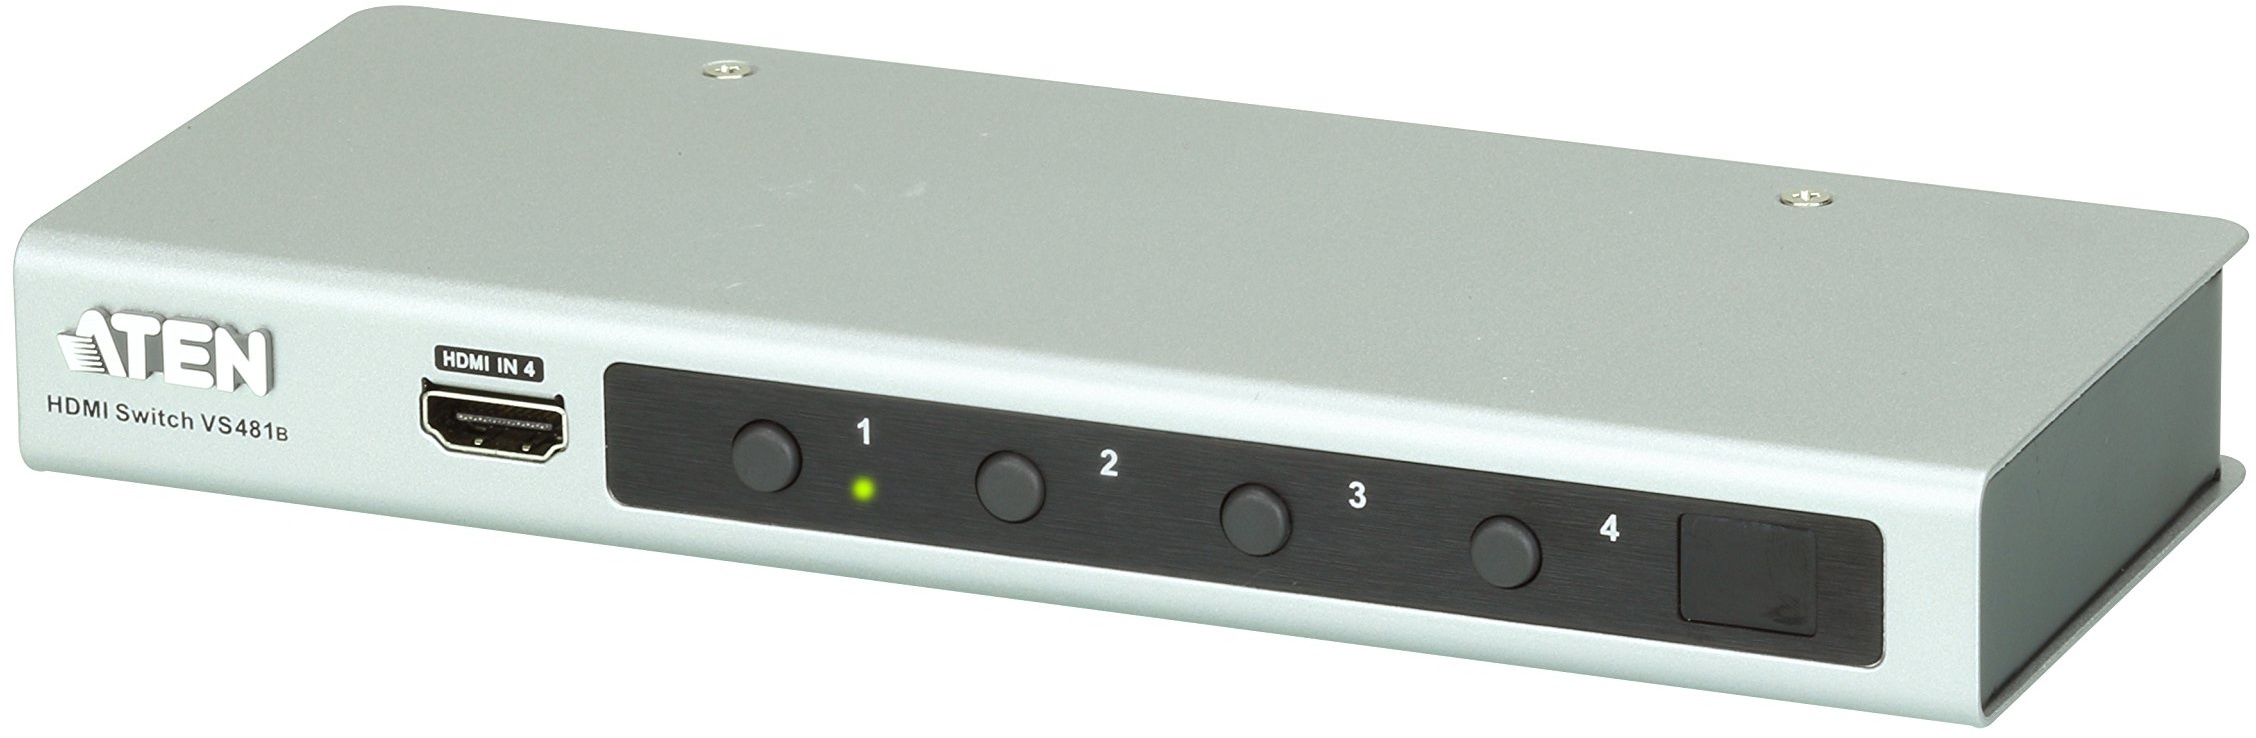 ATEN VS481B HDMI Switch (4 Port, Ultra HD 4K)